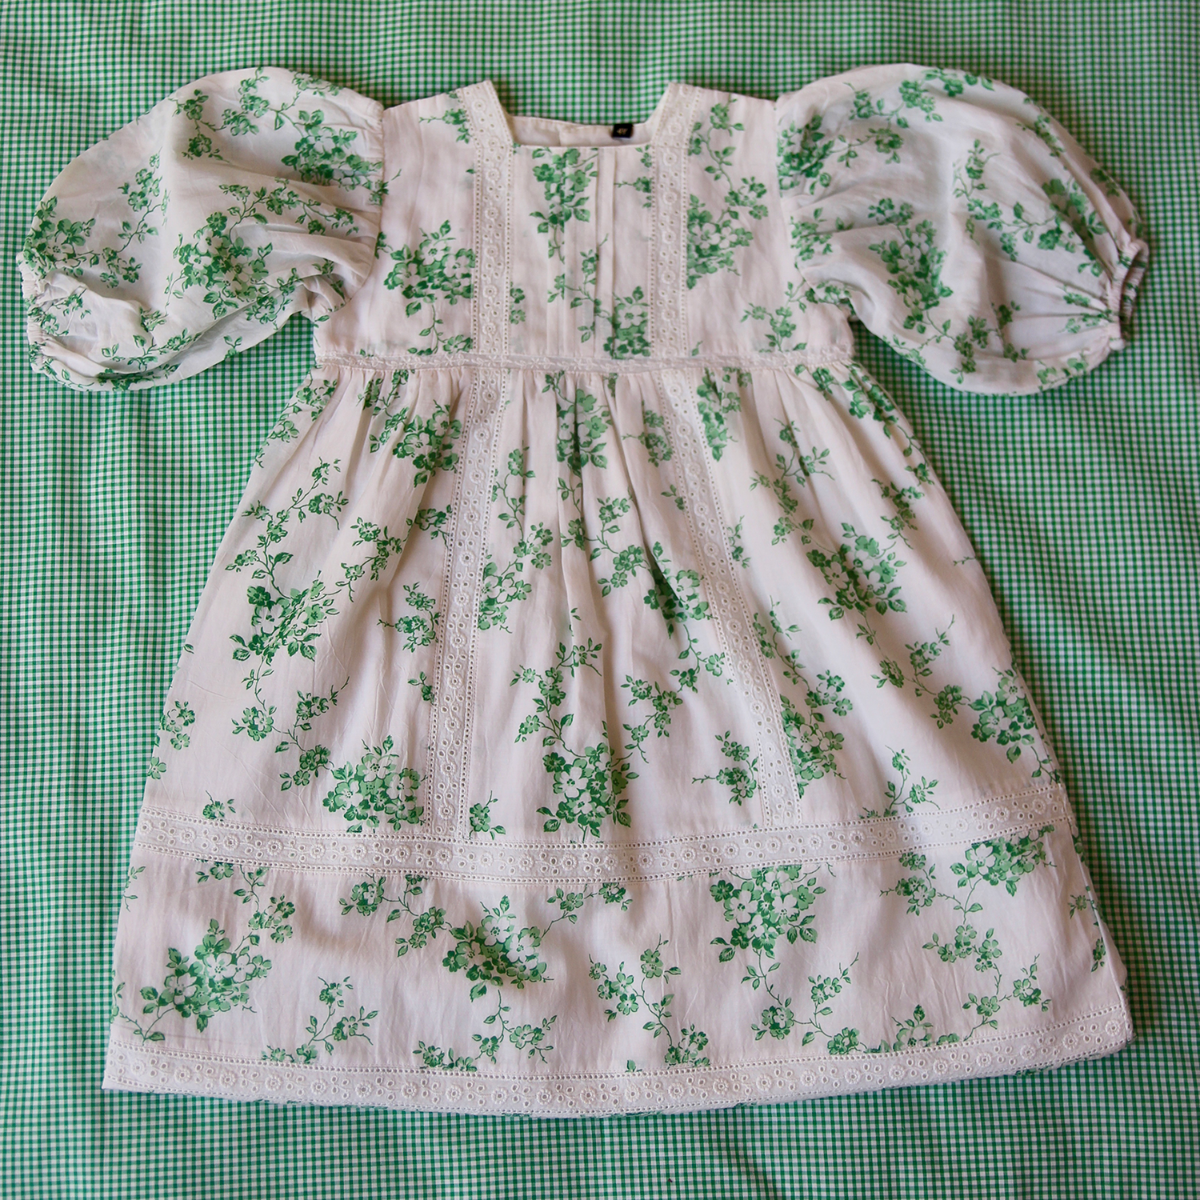 Memory dress(Green flower print cotton/viscose)